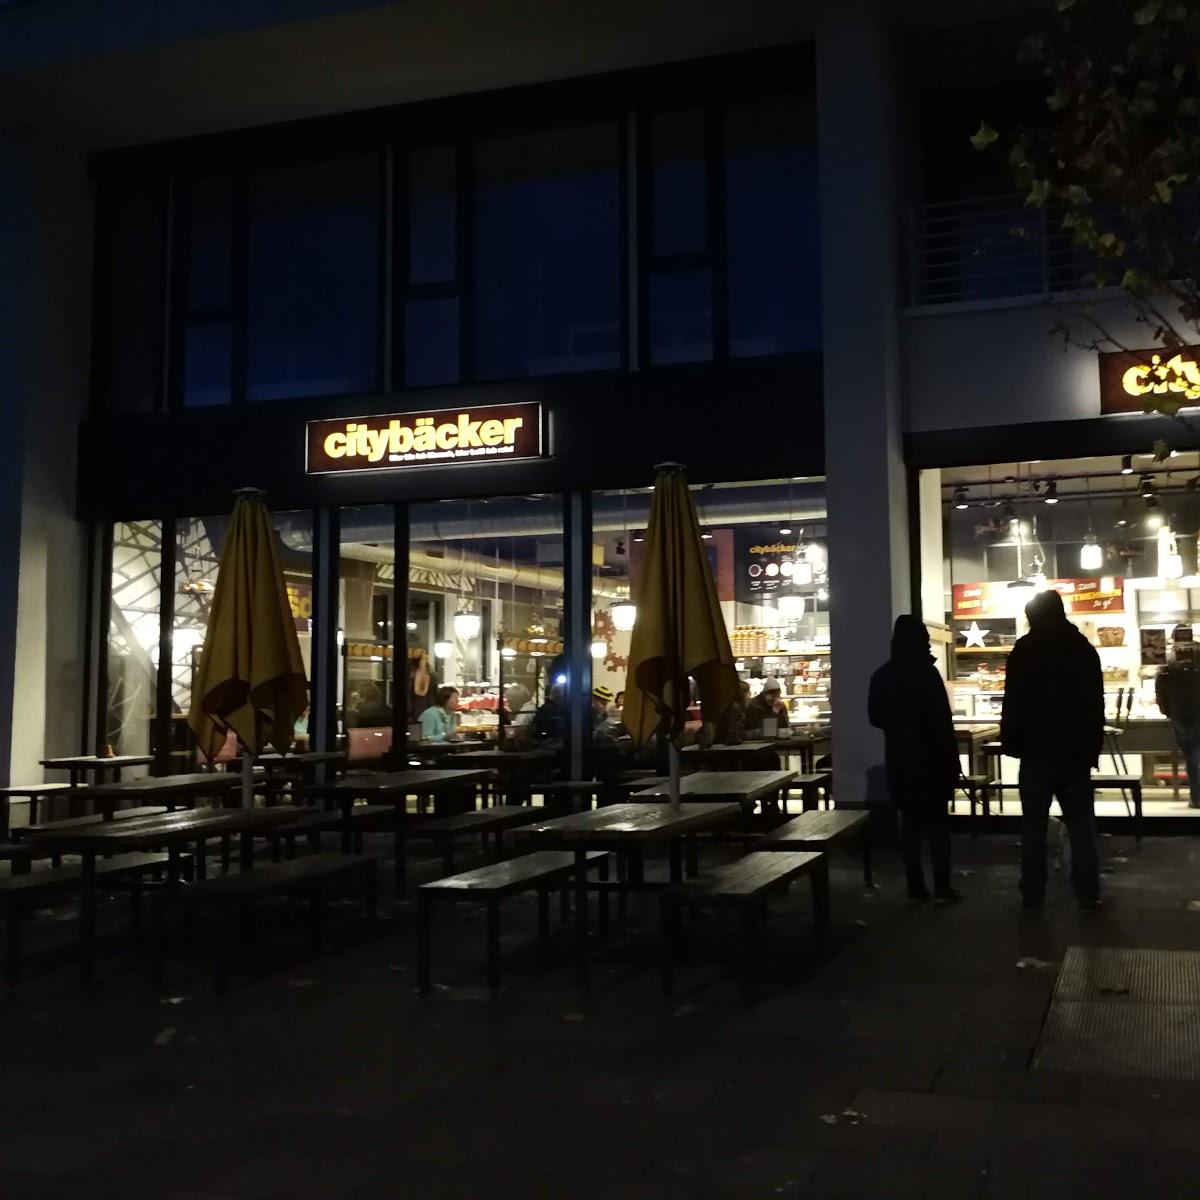 Restaurant "Avo & Cado" in Dortmund